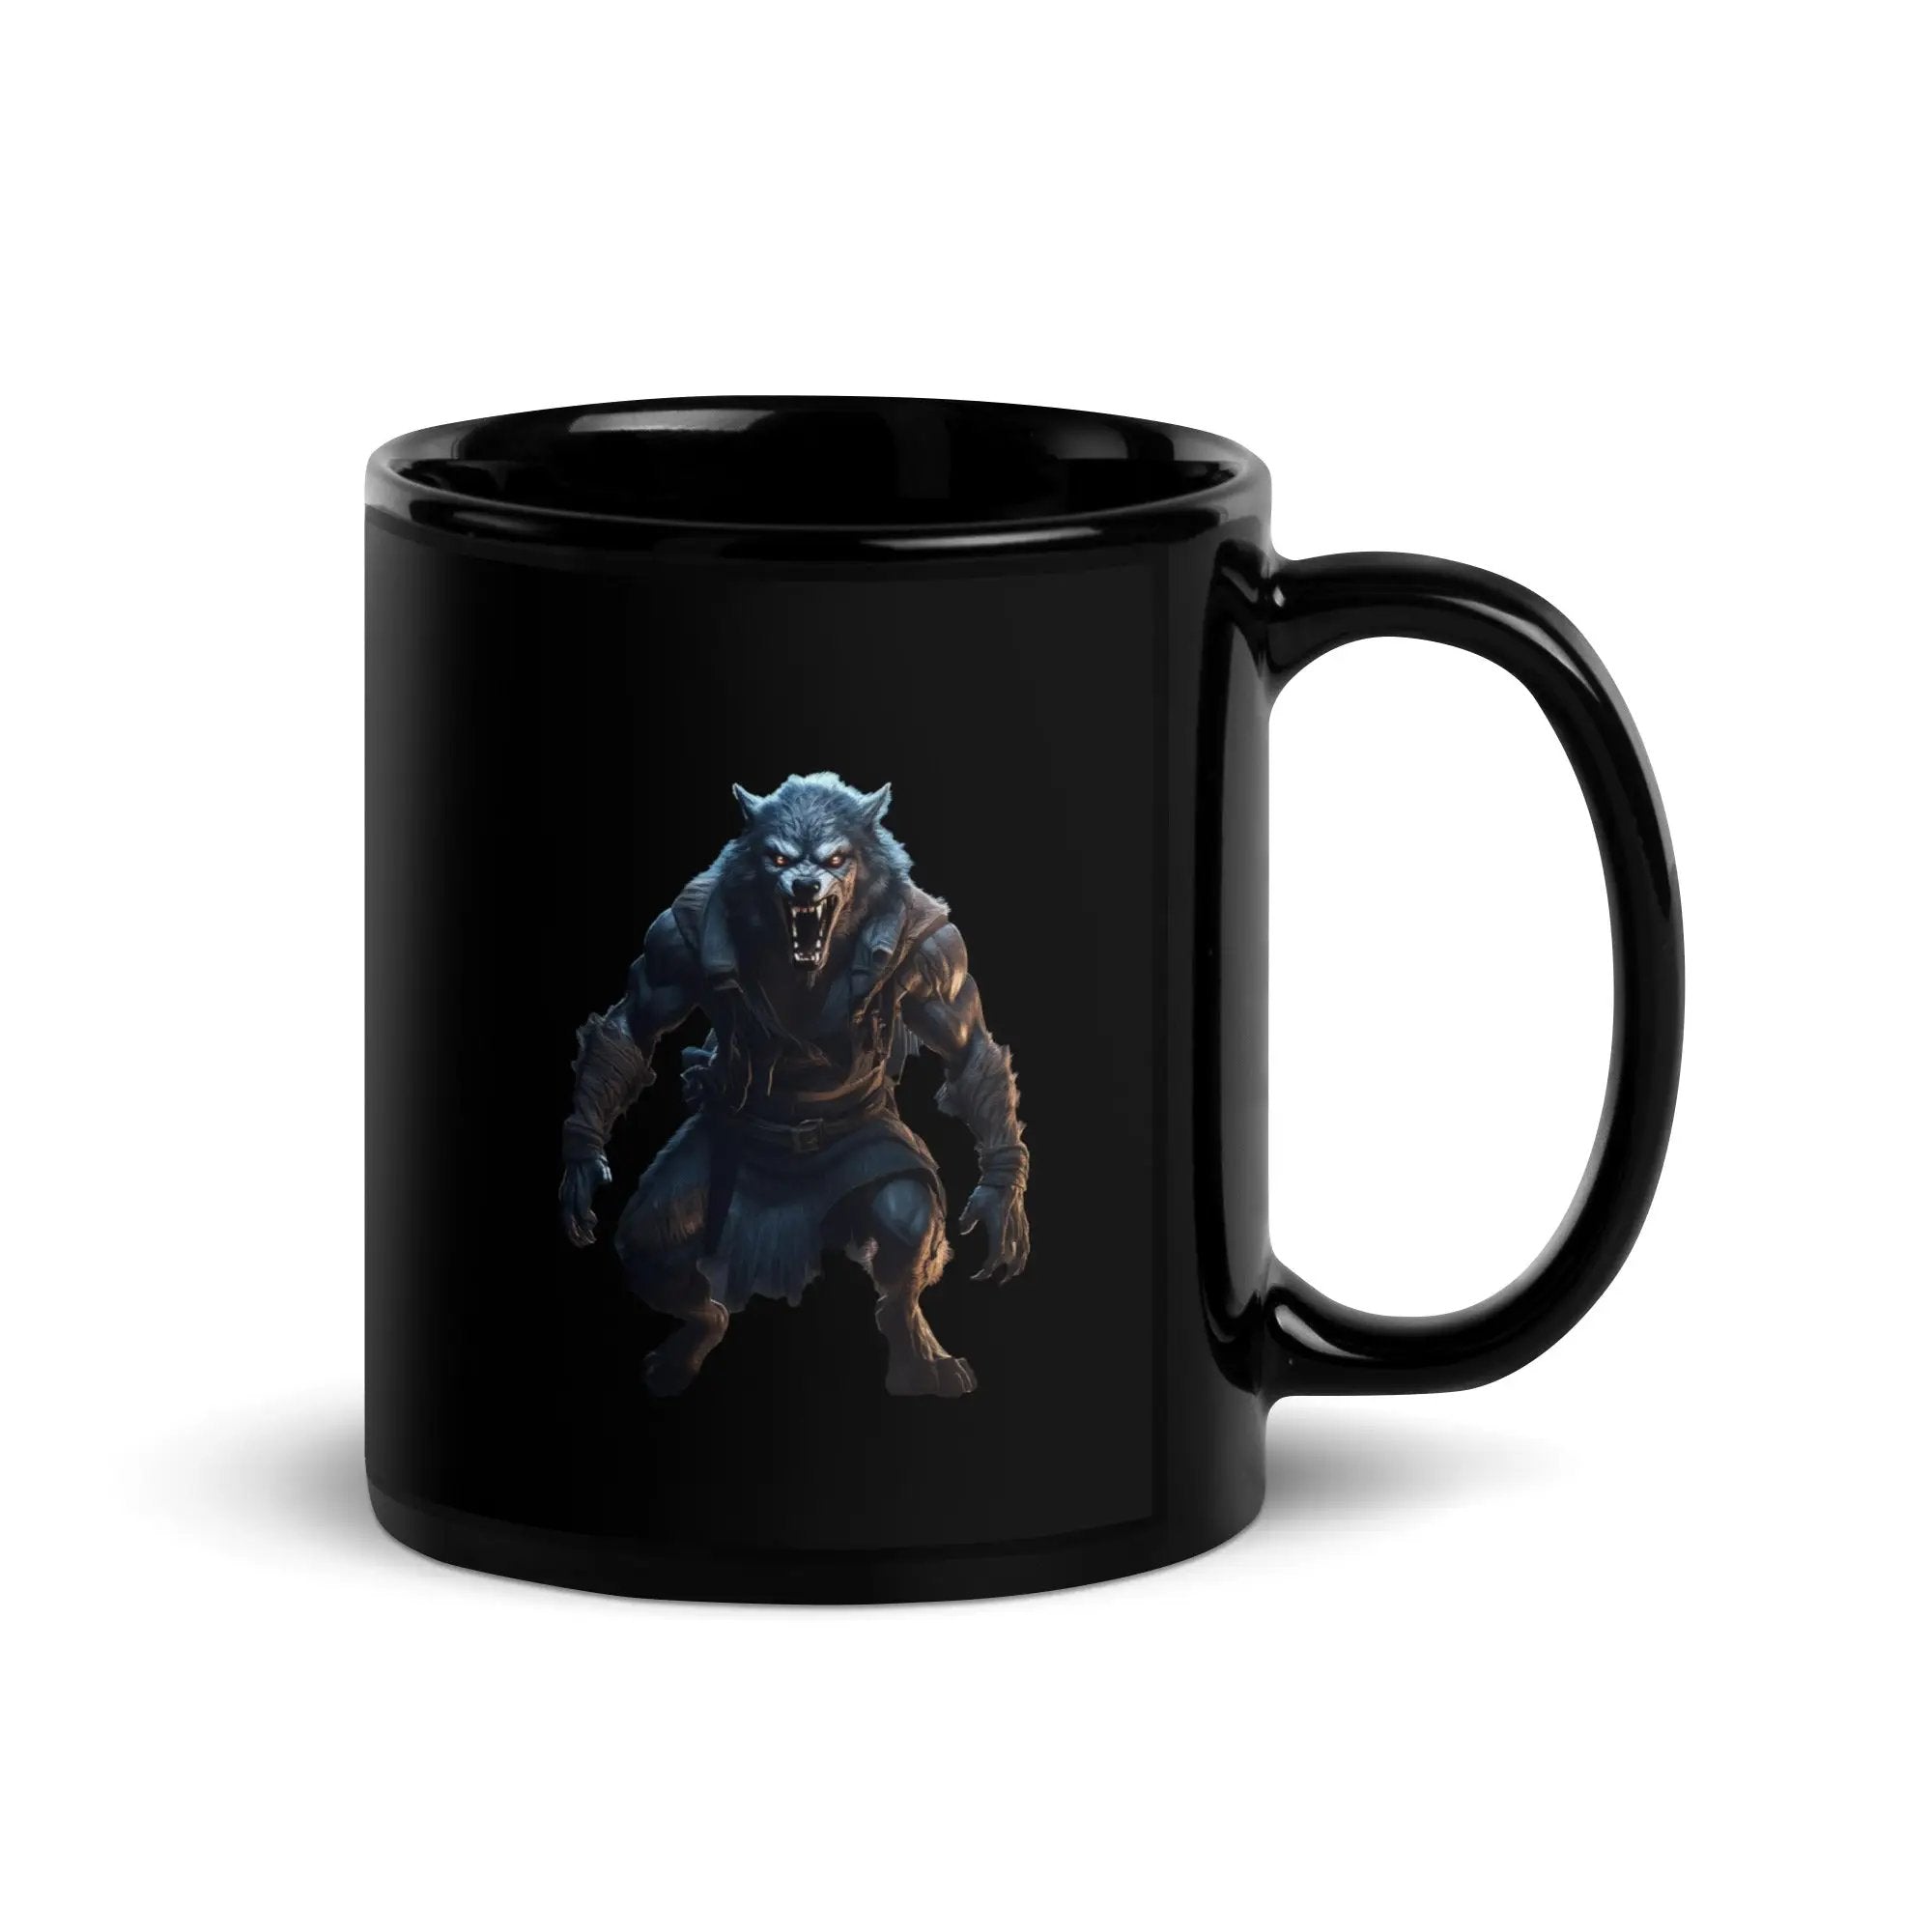 The Monster Squad "Wolfman" Black Glossy mug